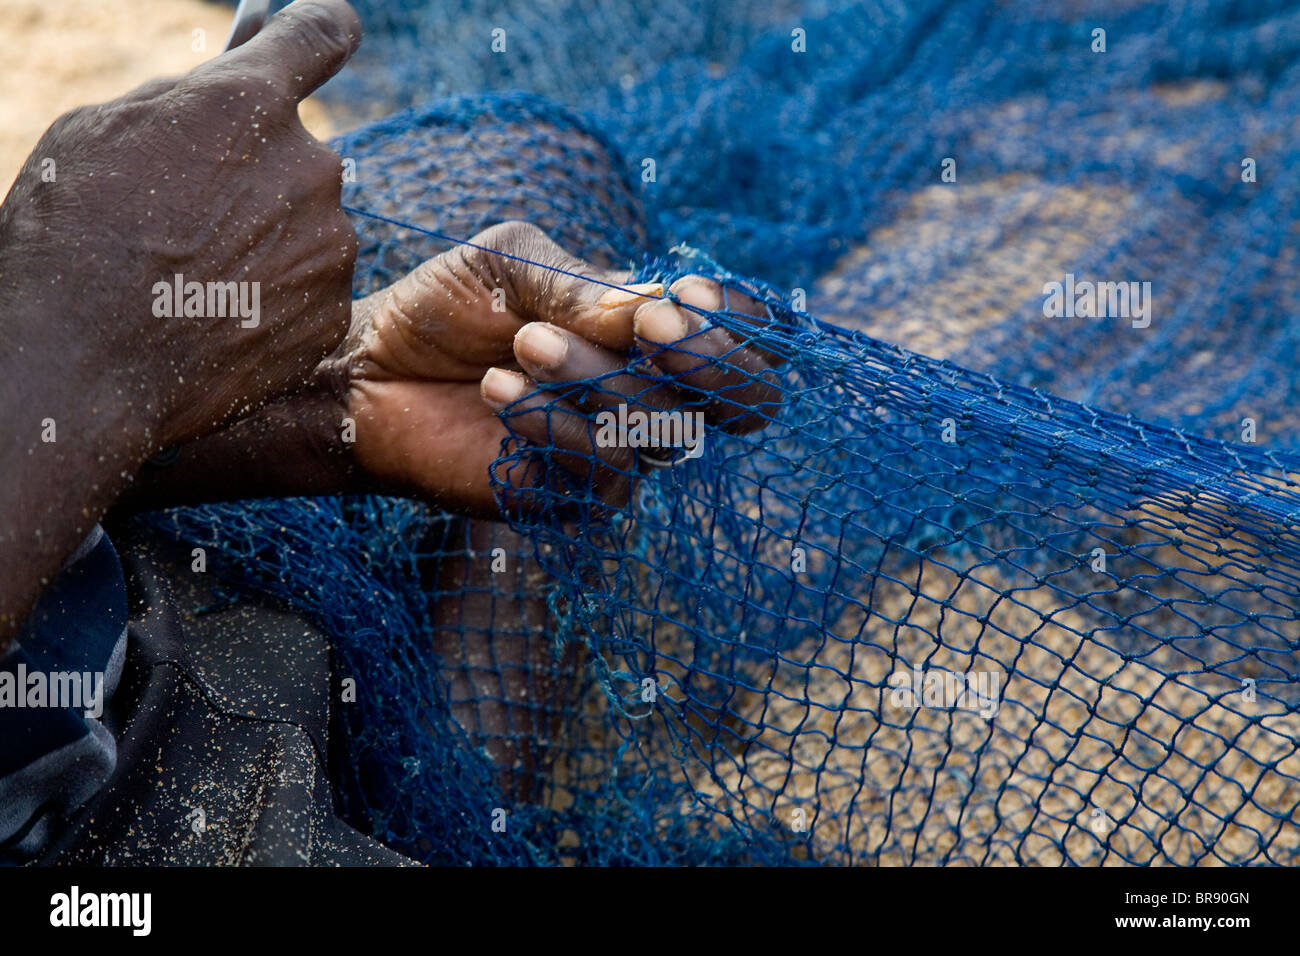 Close up of hands mending a net Stock Photo